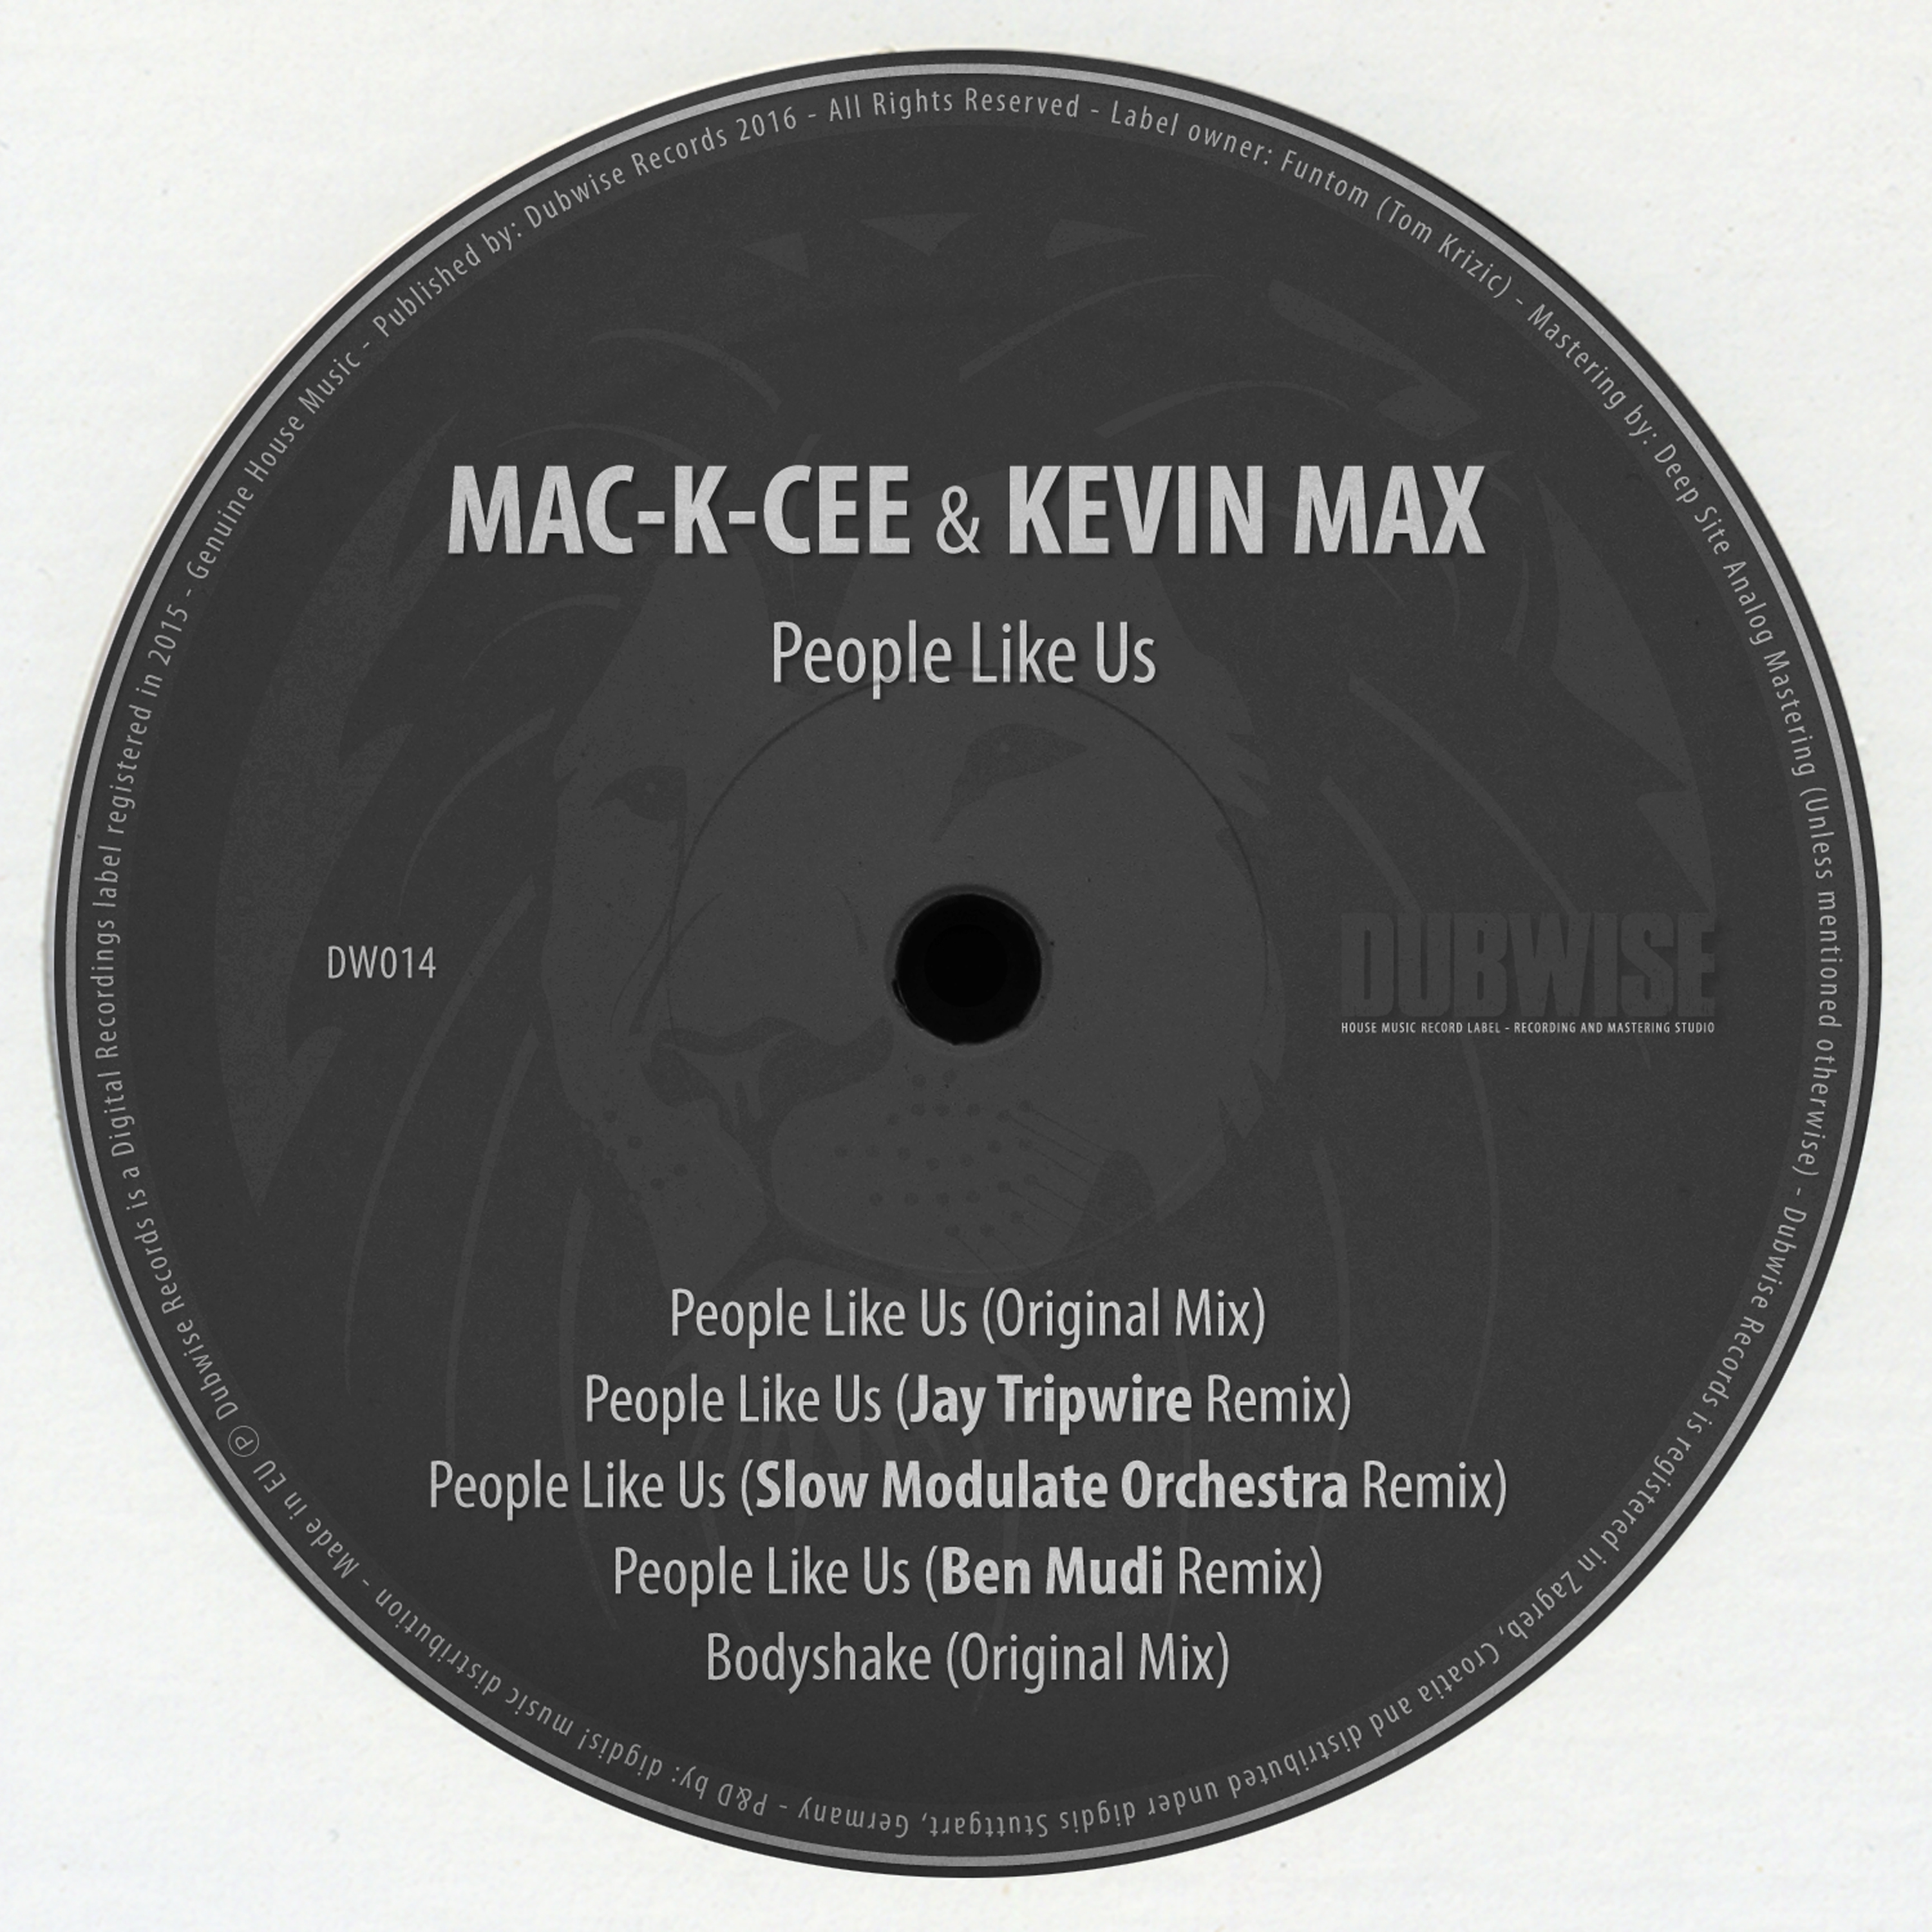 People Like Us (Slow Modulate Orchestra Remix)